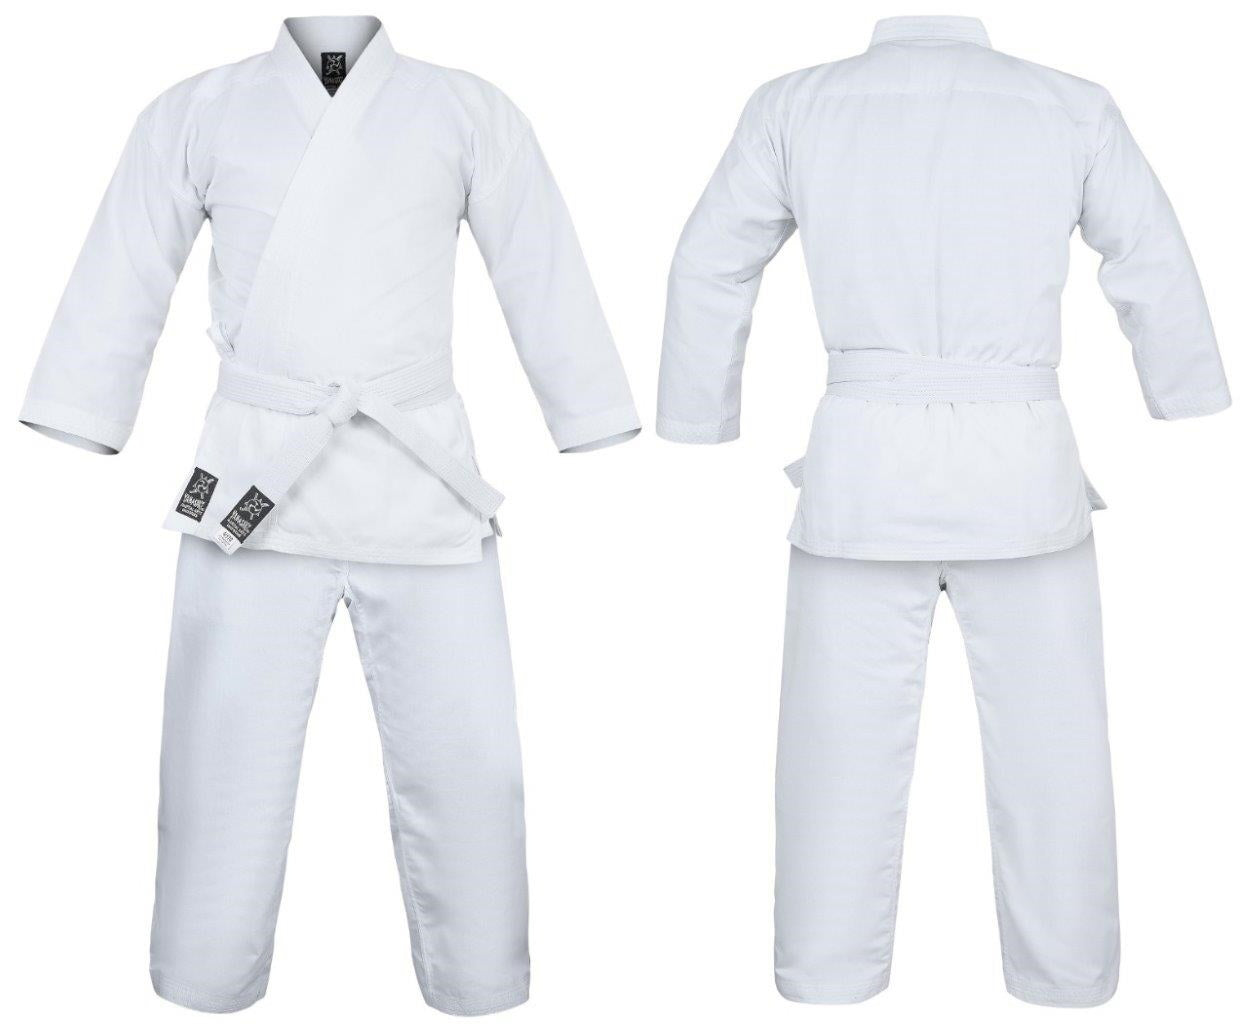 Yamasaki Pro Karate Uniform | White [10oz] - Fitness Hero Brand new